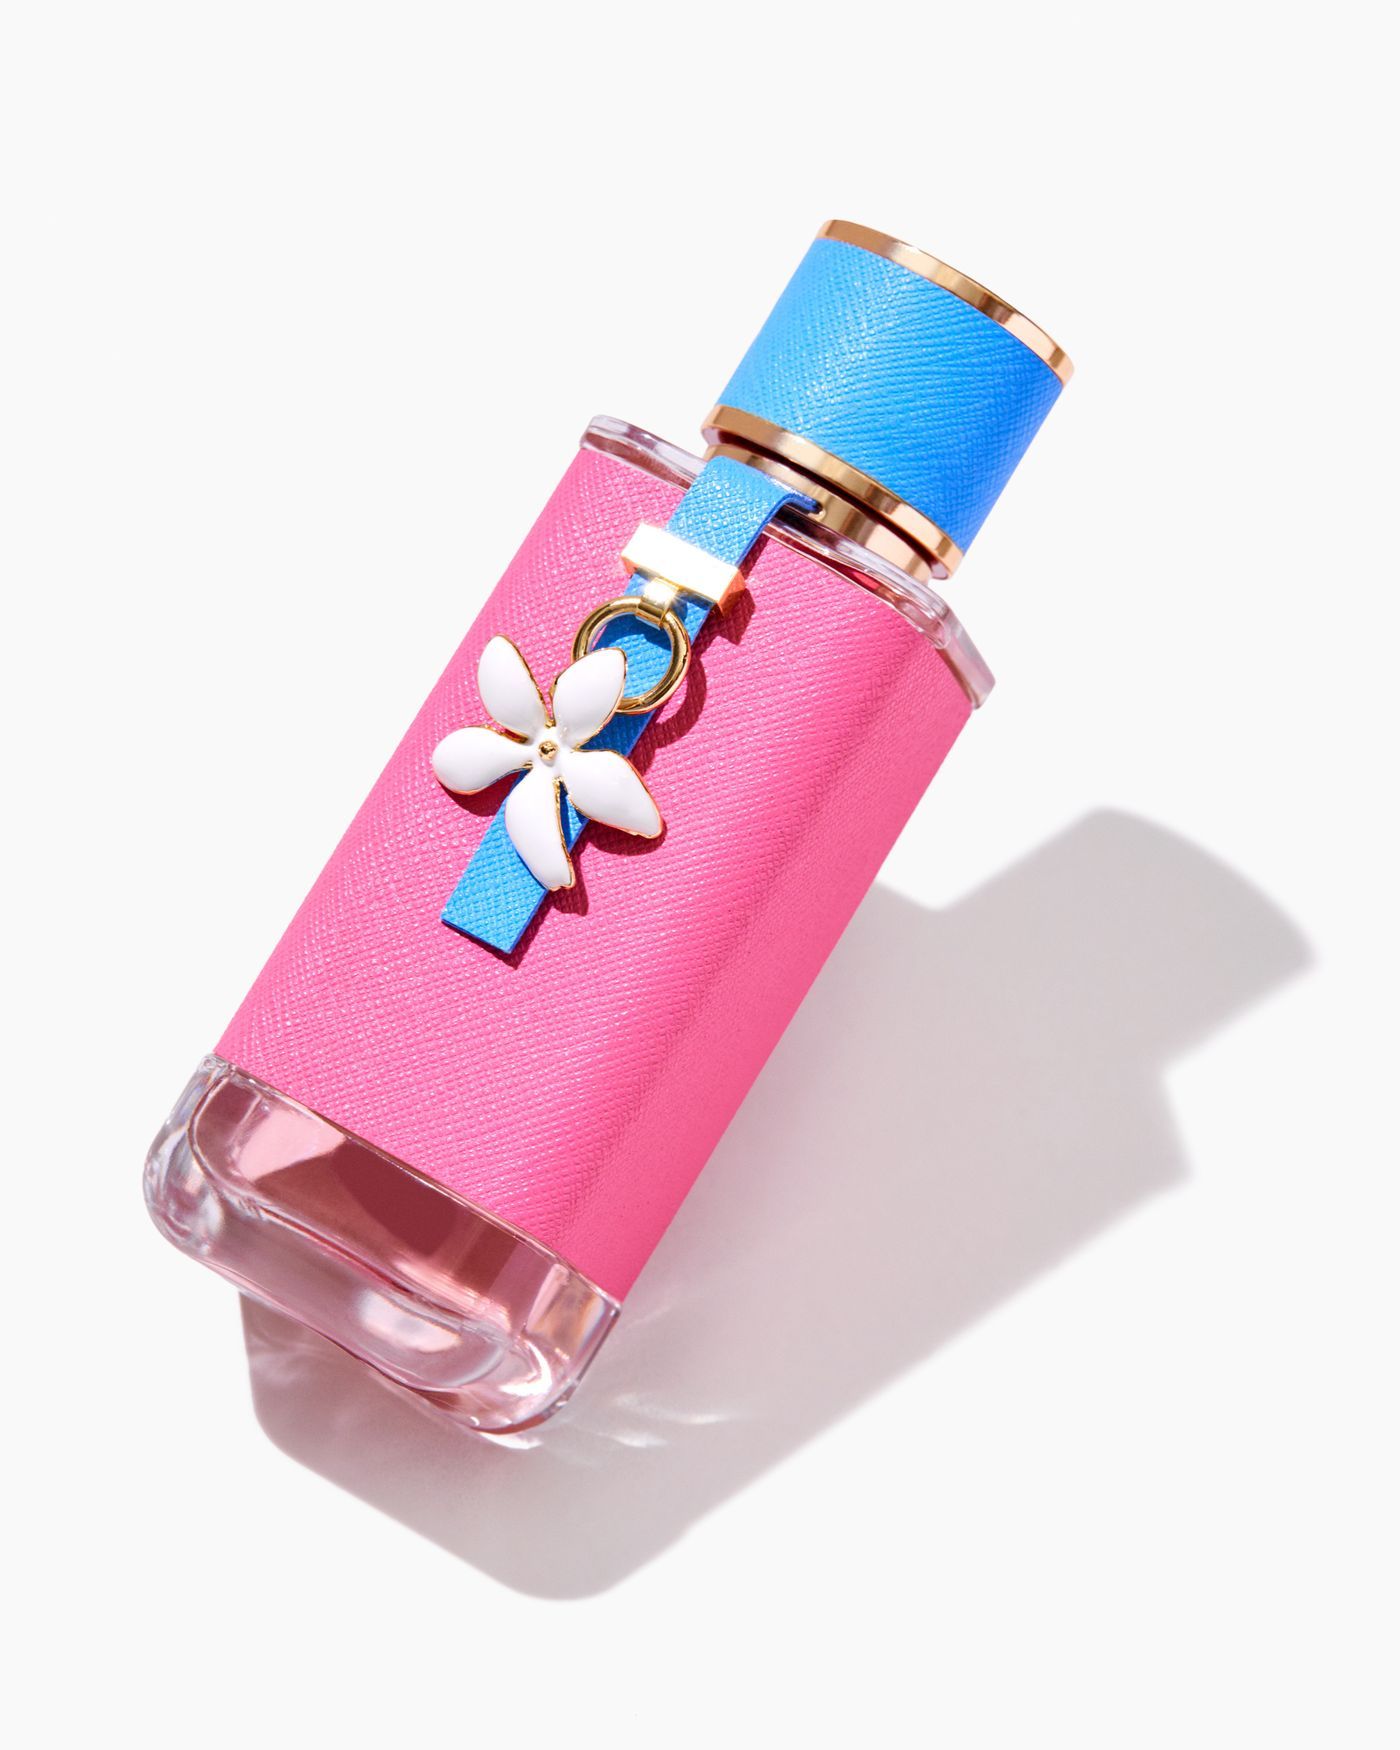 Alegria de Vivir Carolina Herrera perfume - a new fragrance for women 2022